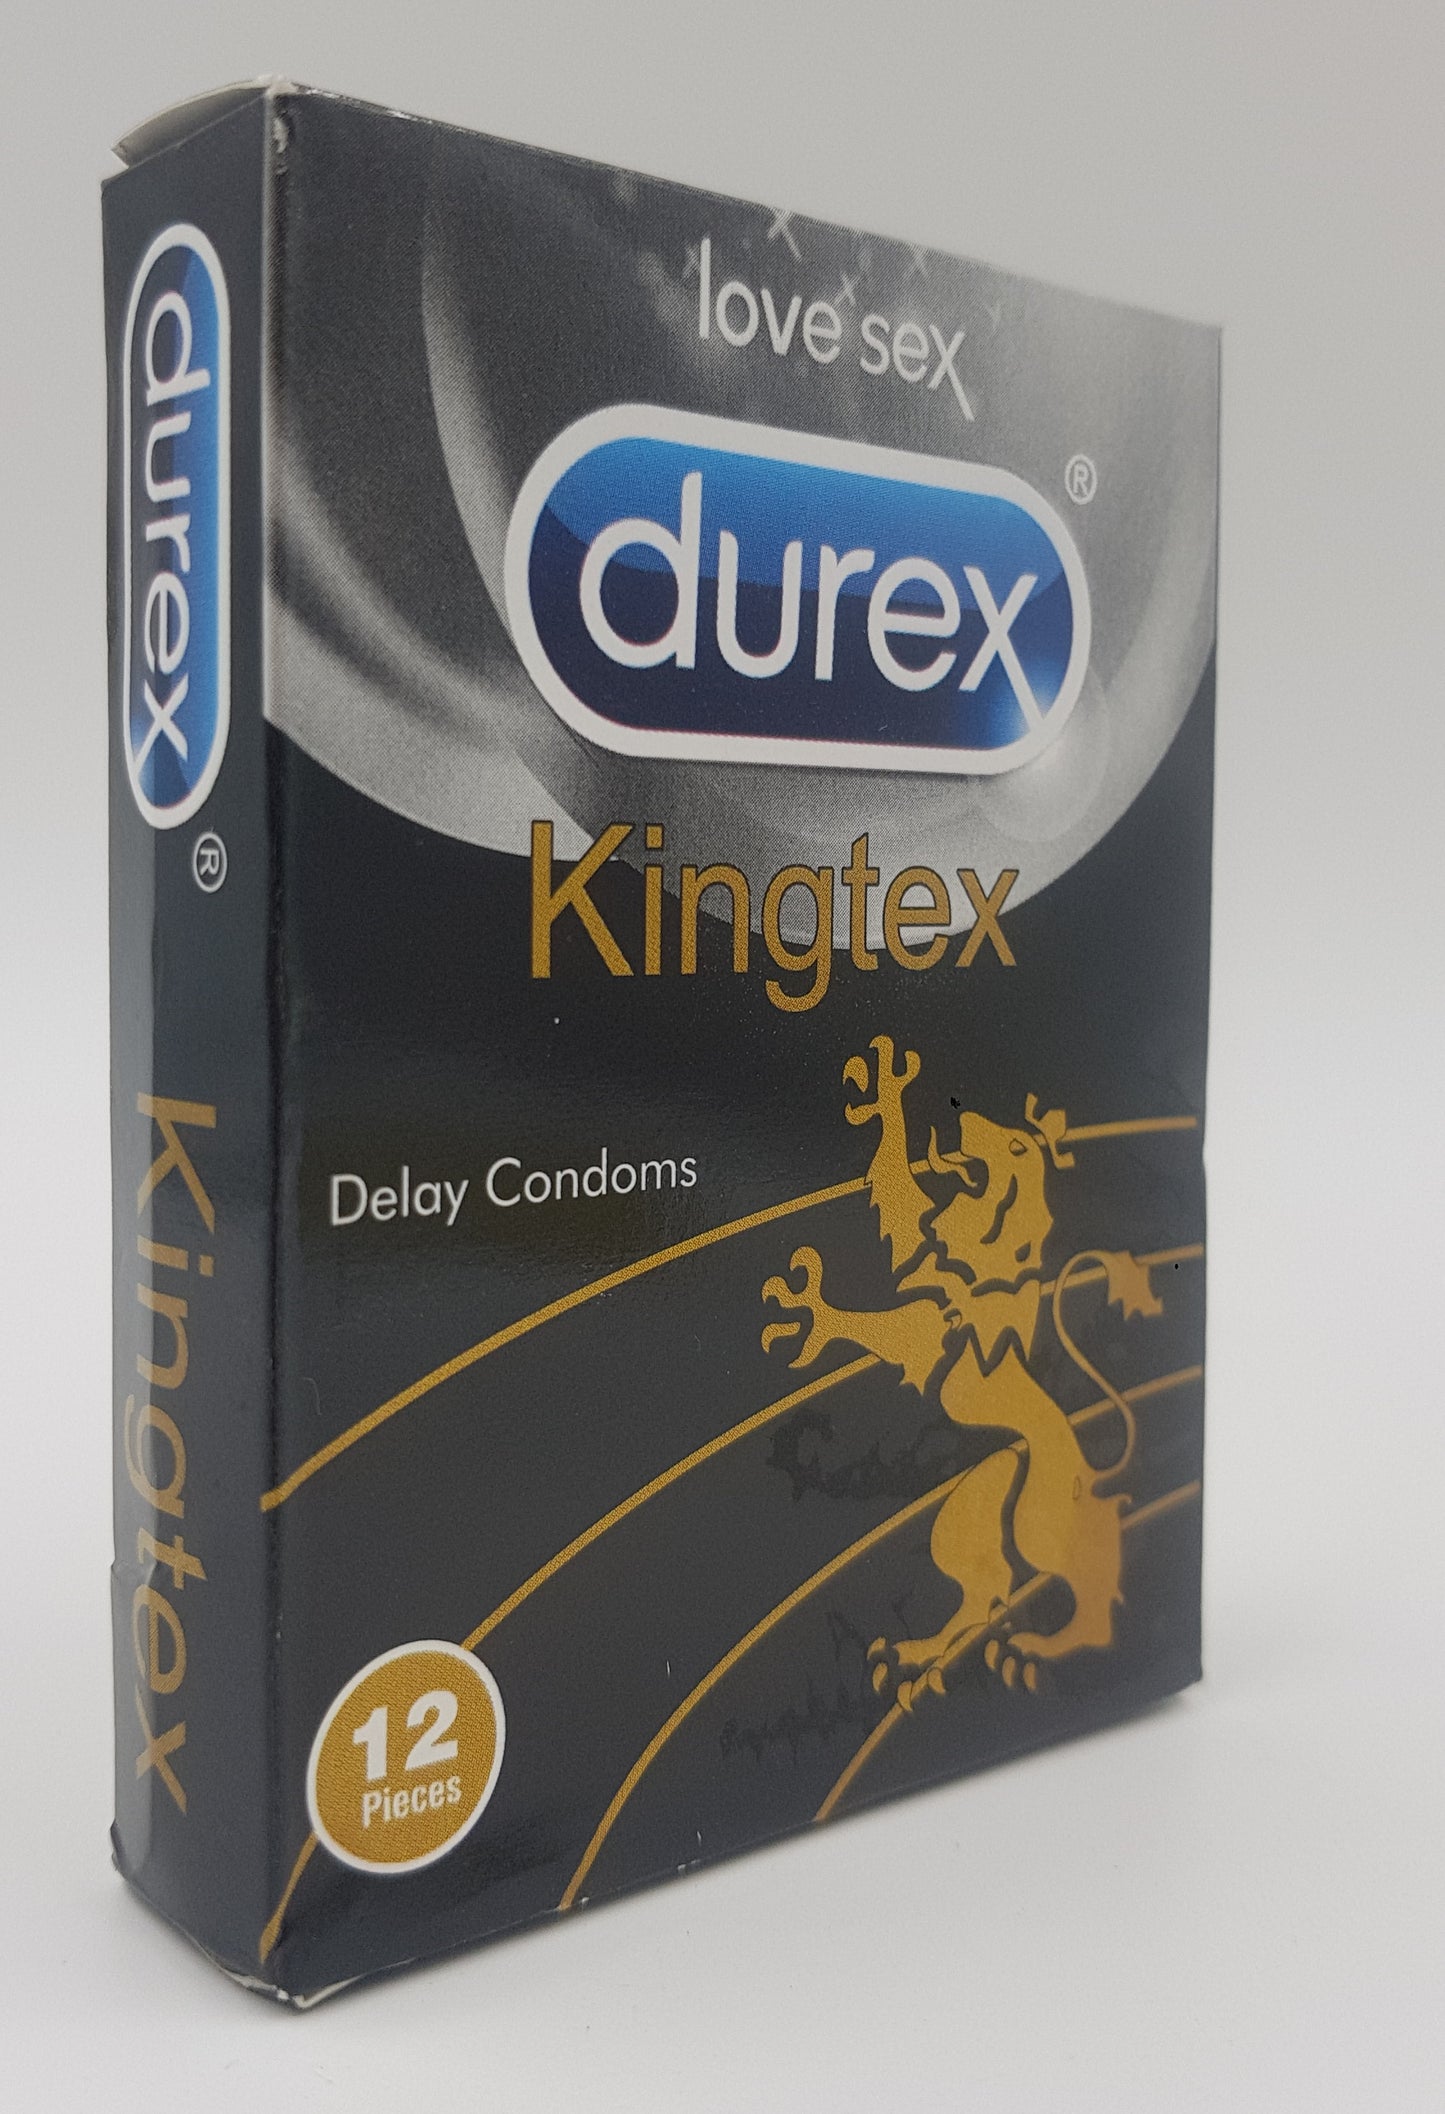 Durex Kingtex Condoms - 12 Delay Condoms